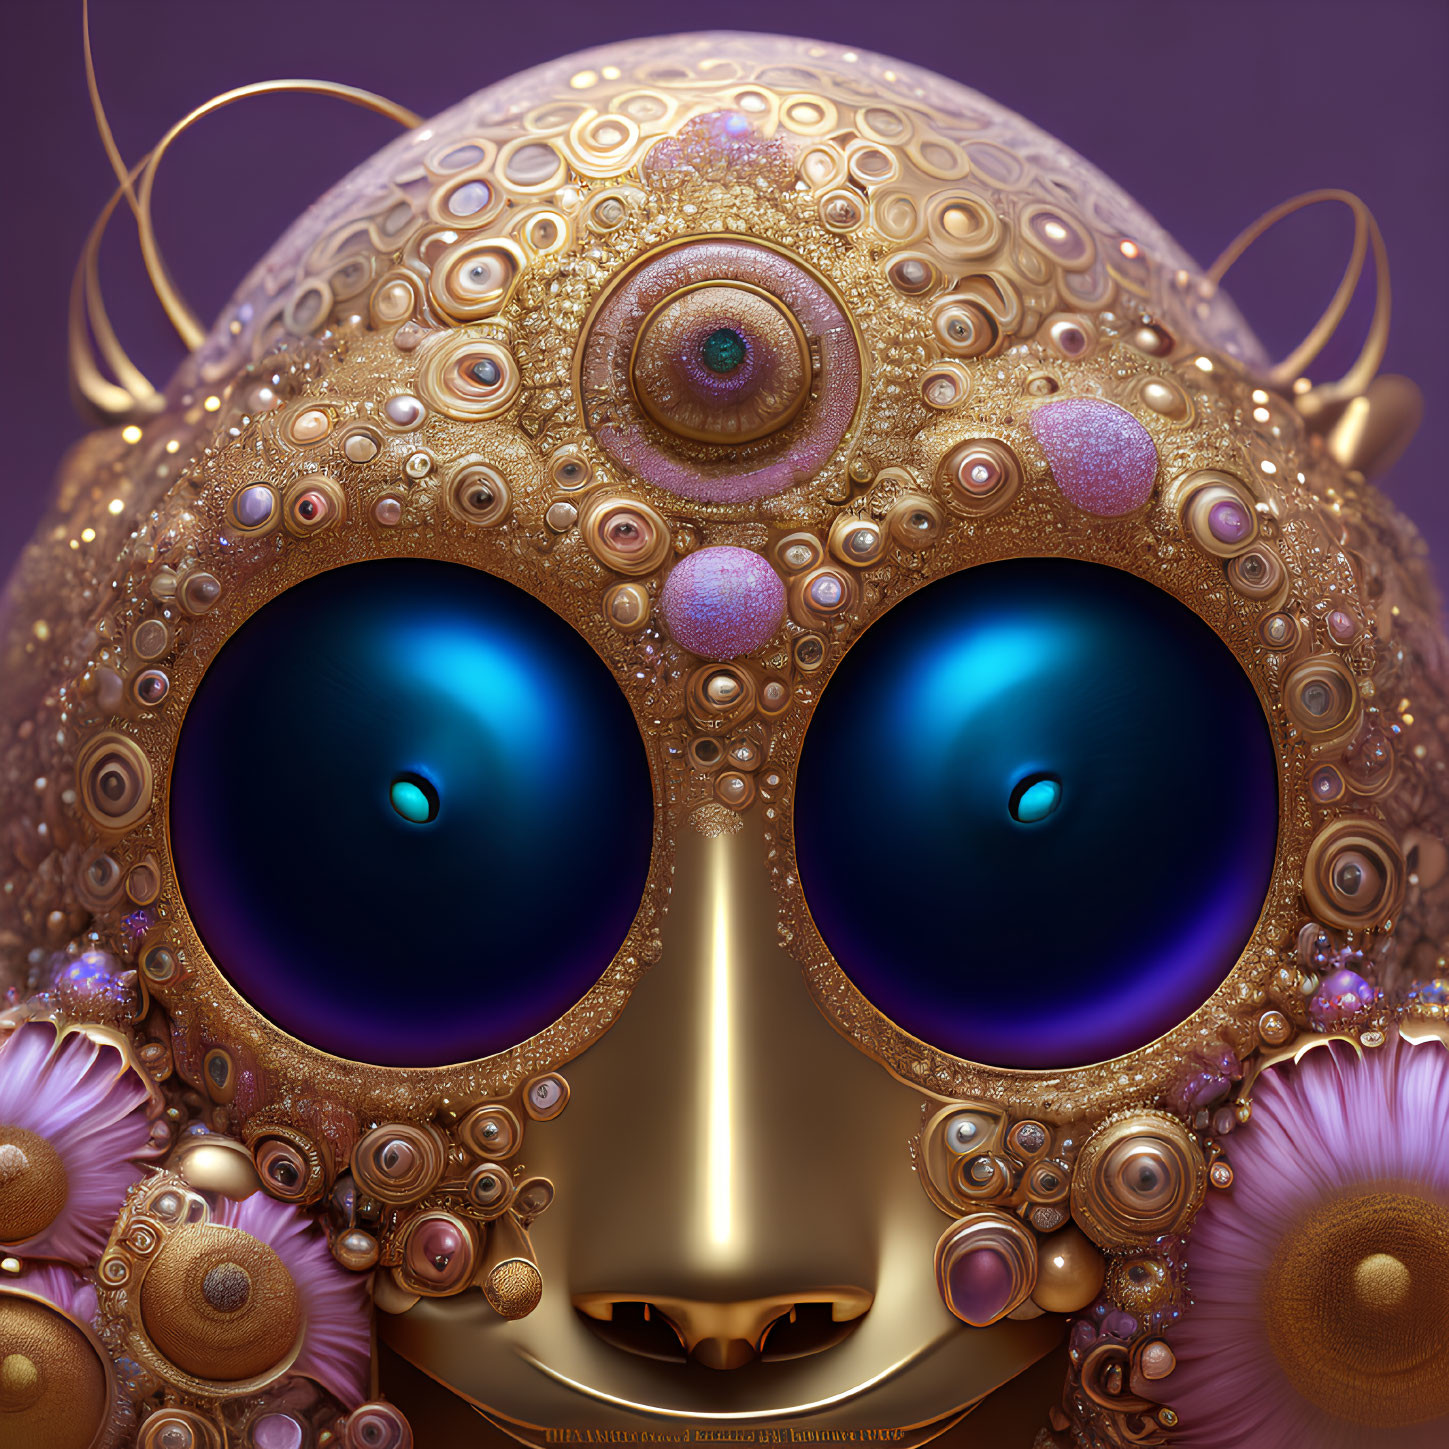 Golden robotic face with captivating blue eyes and ornate jewel-embellished patterns